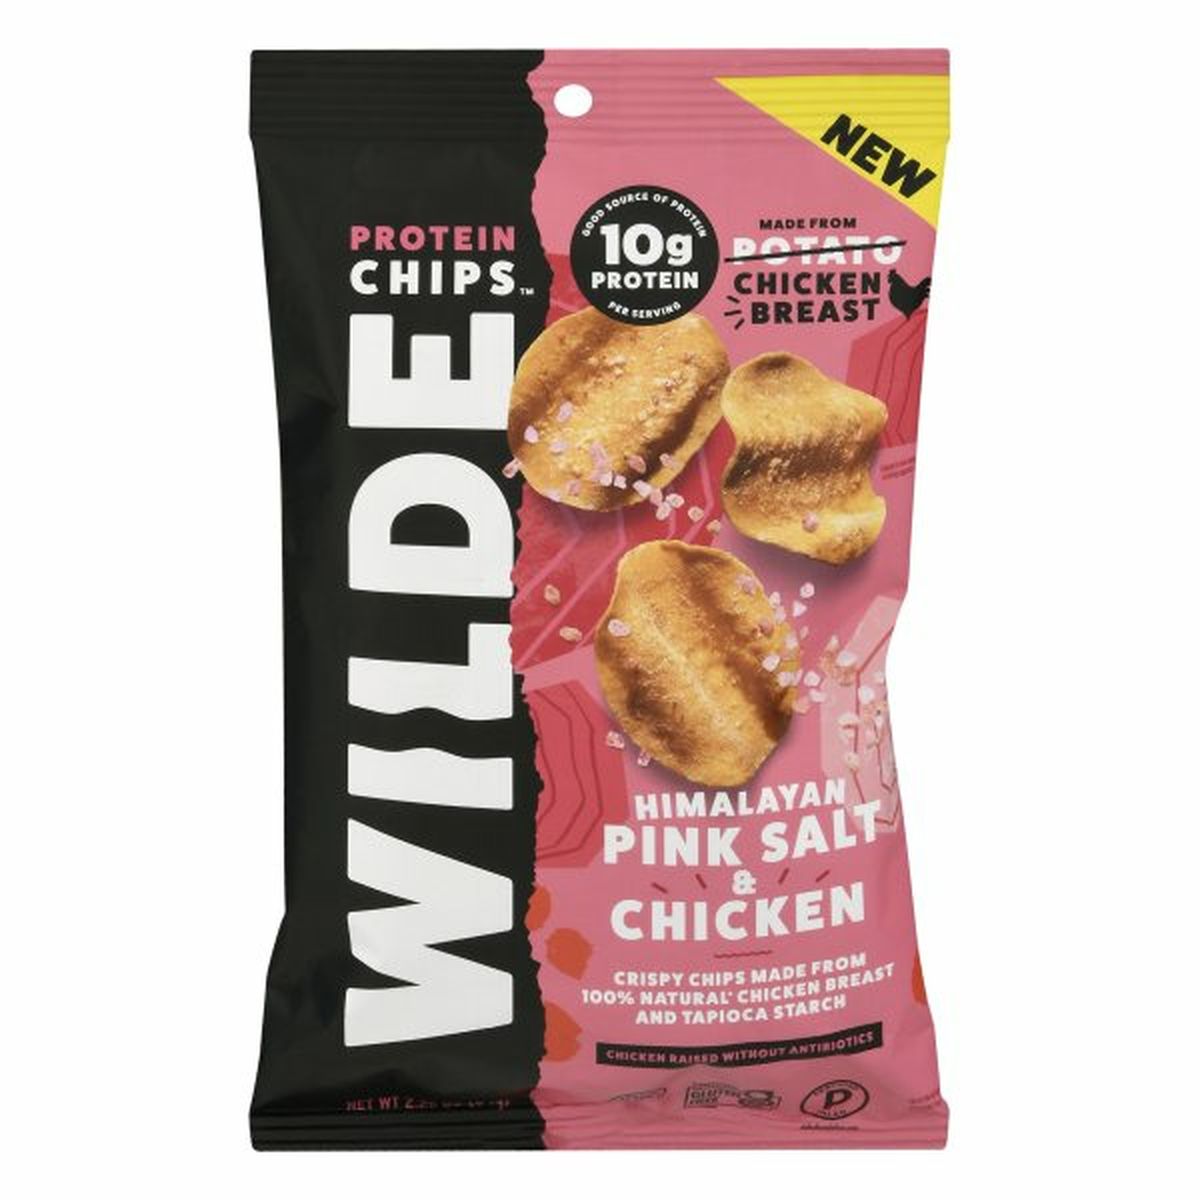 Calories in Wilde Chips Protein Chips, Himalayan Pink Salt & Chicken